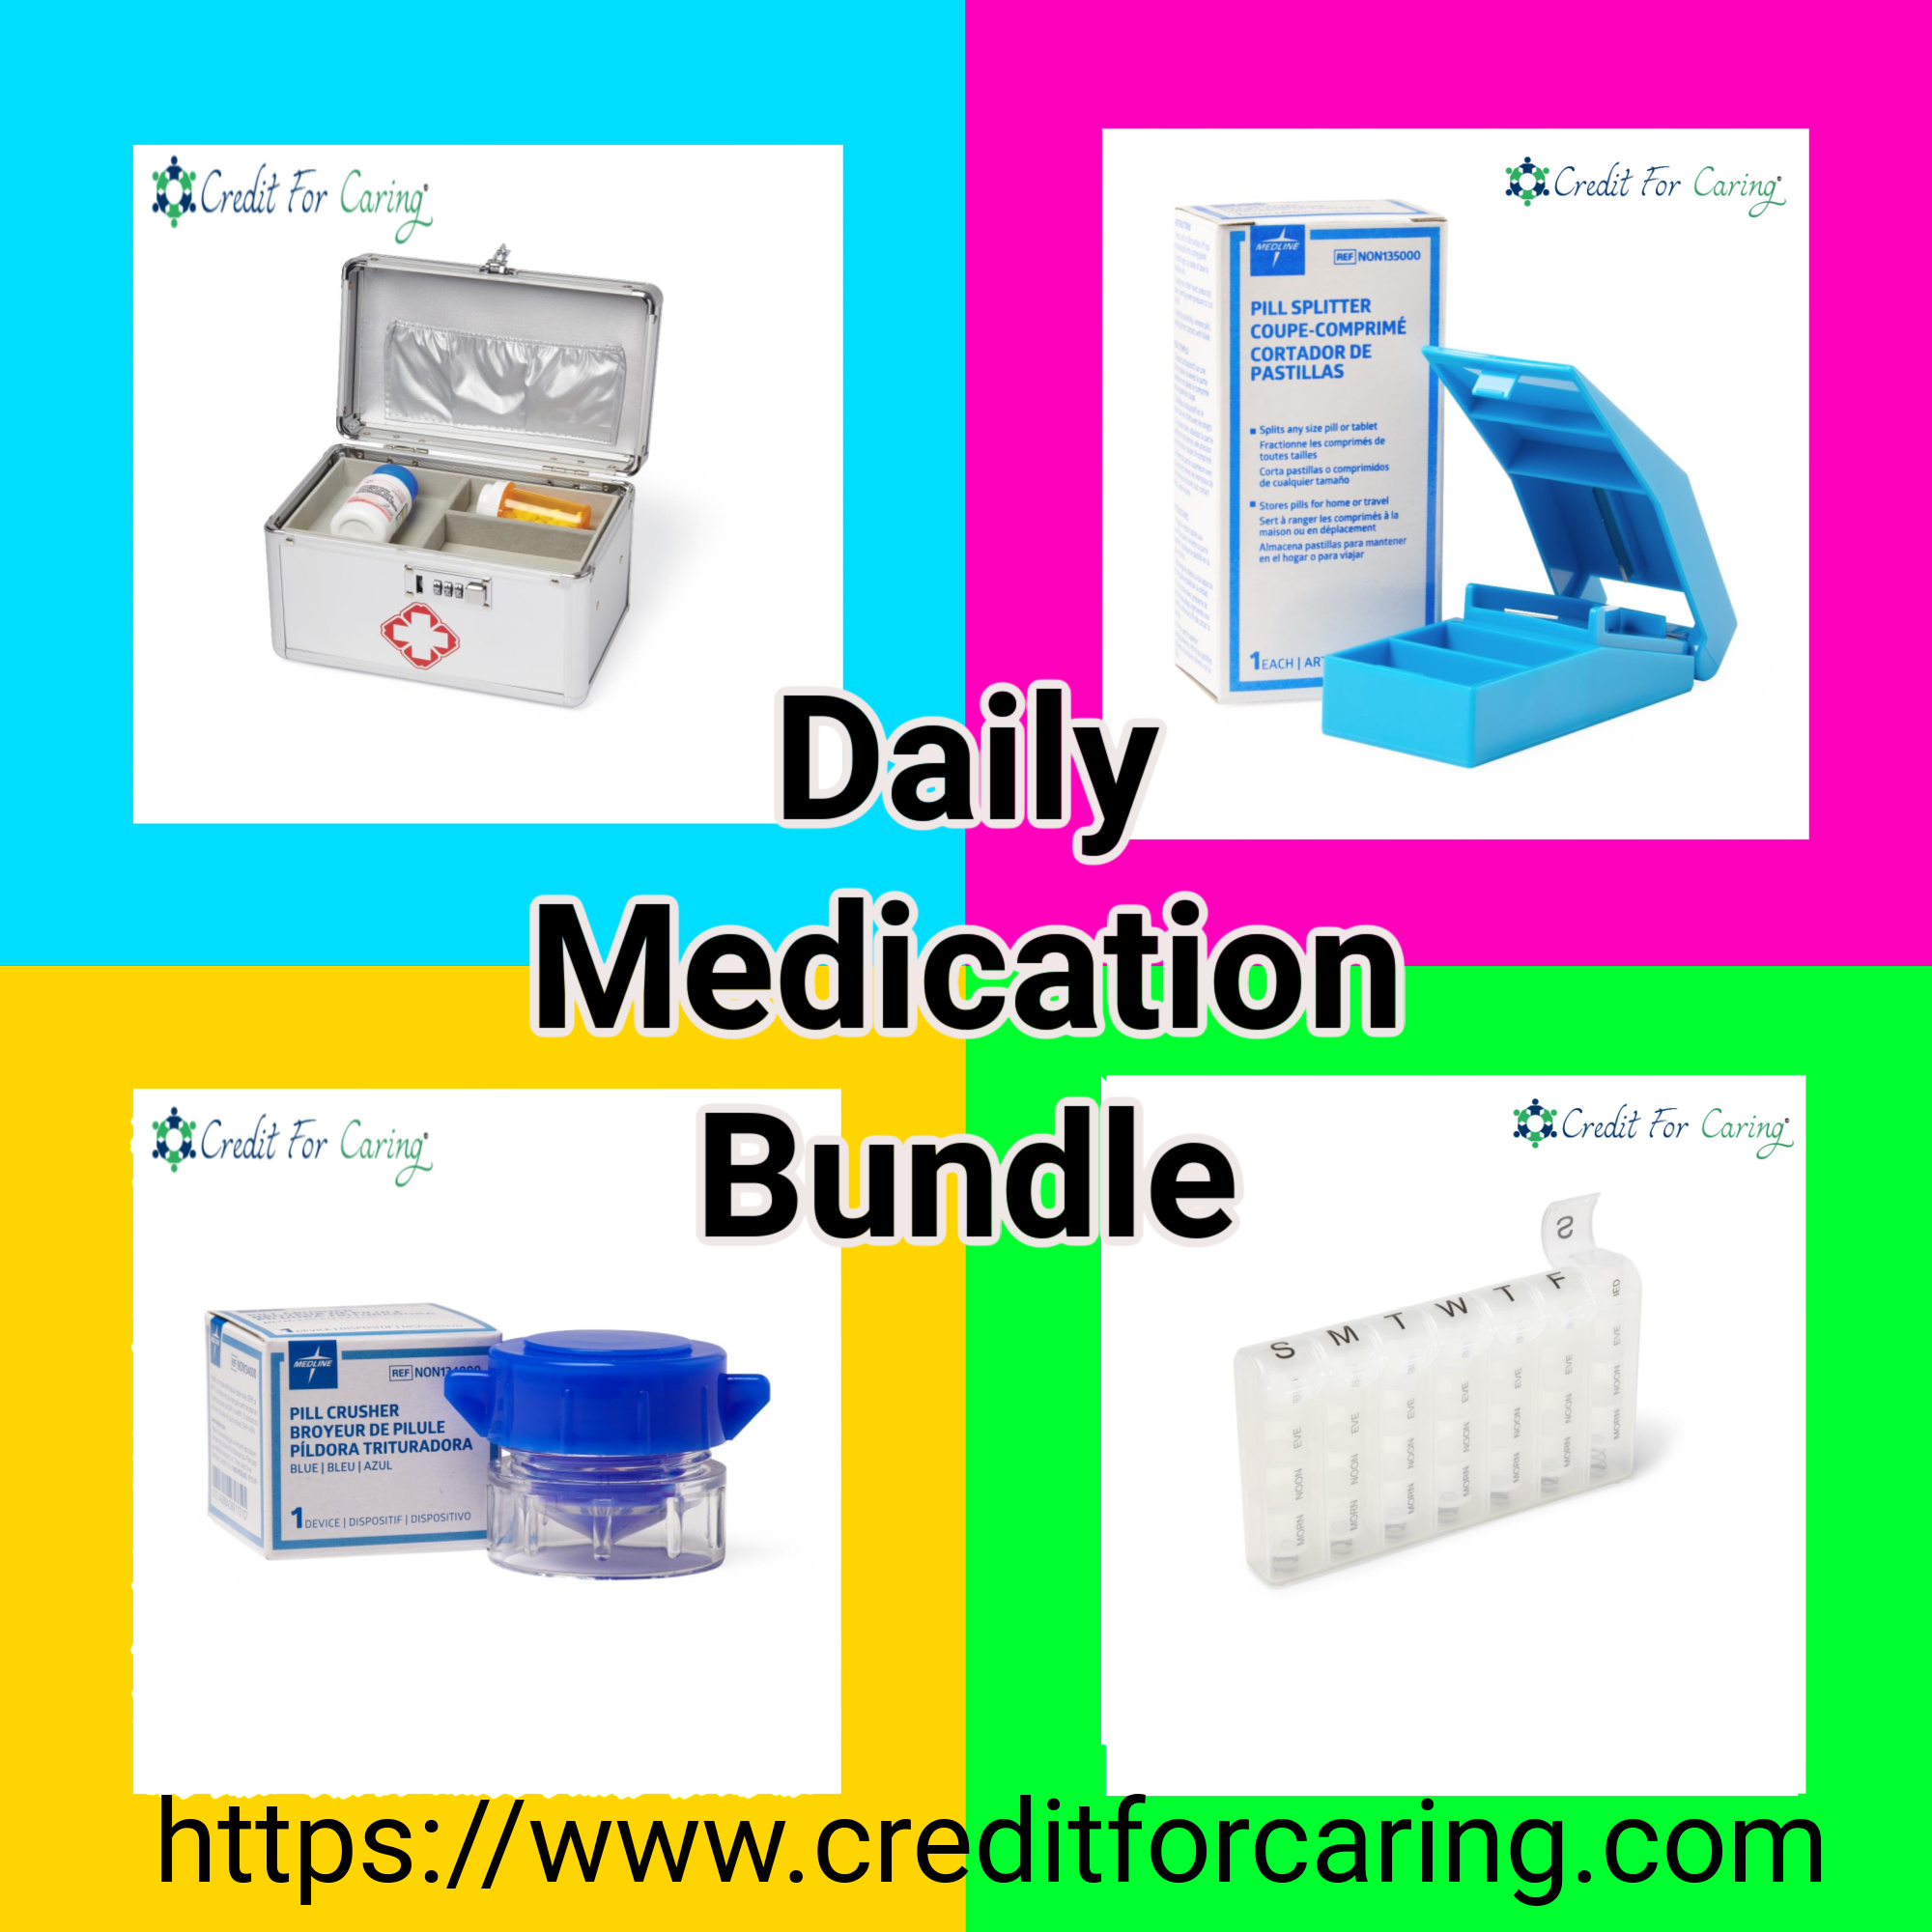 Daily Medication Bundle $61.84